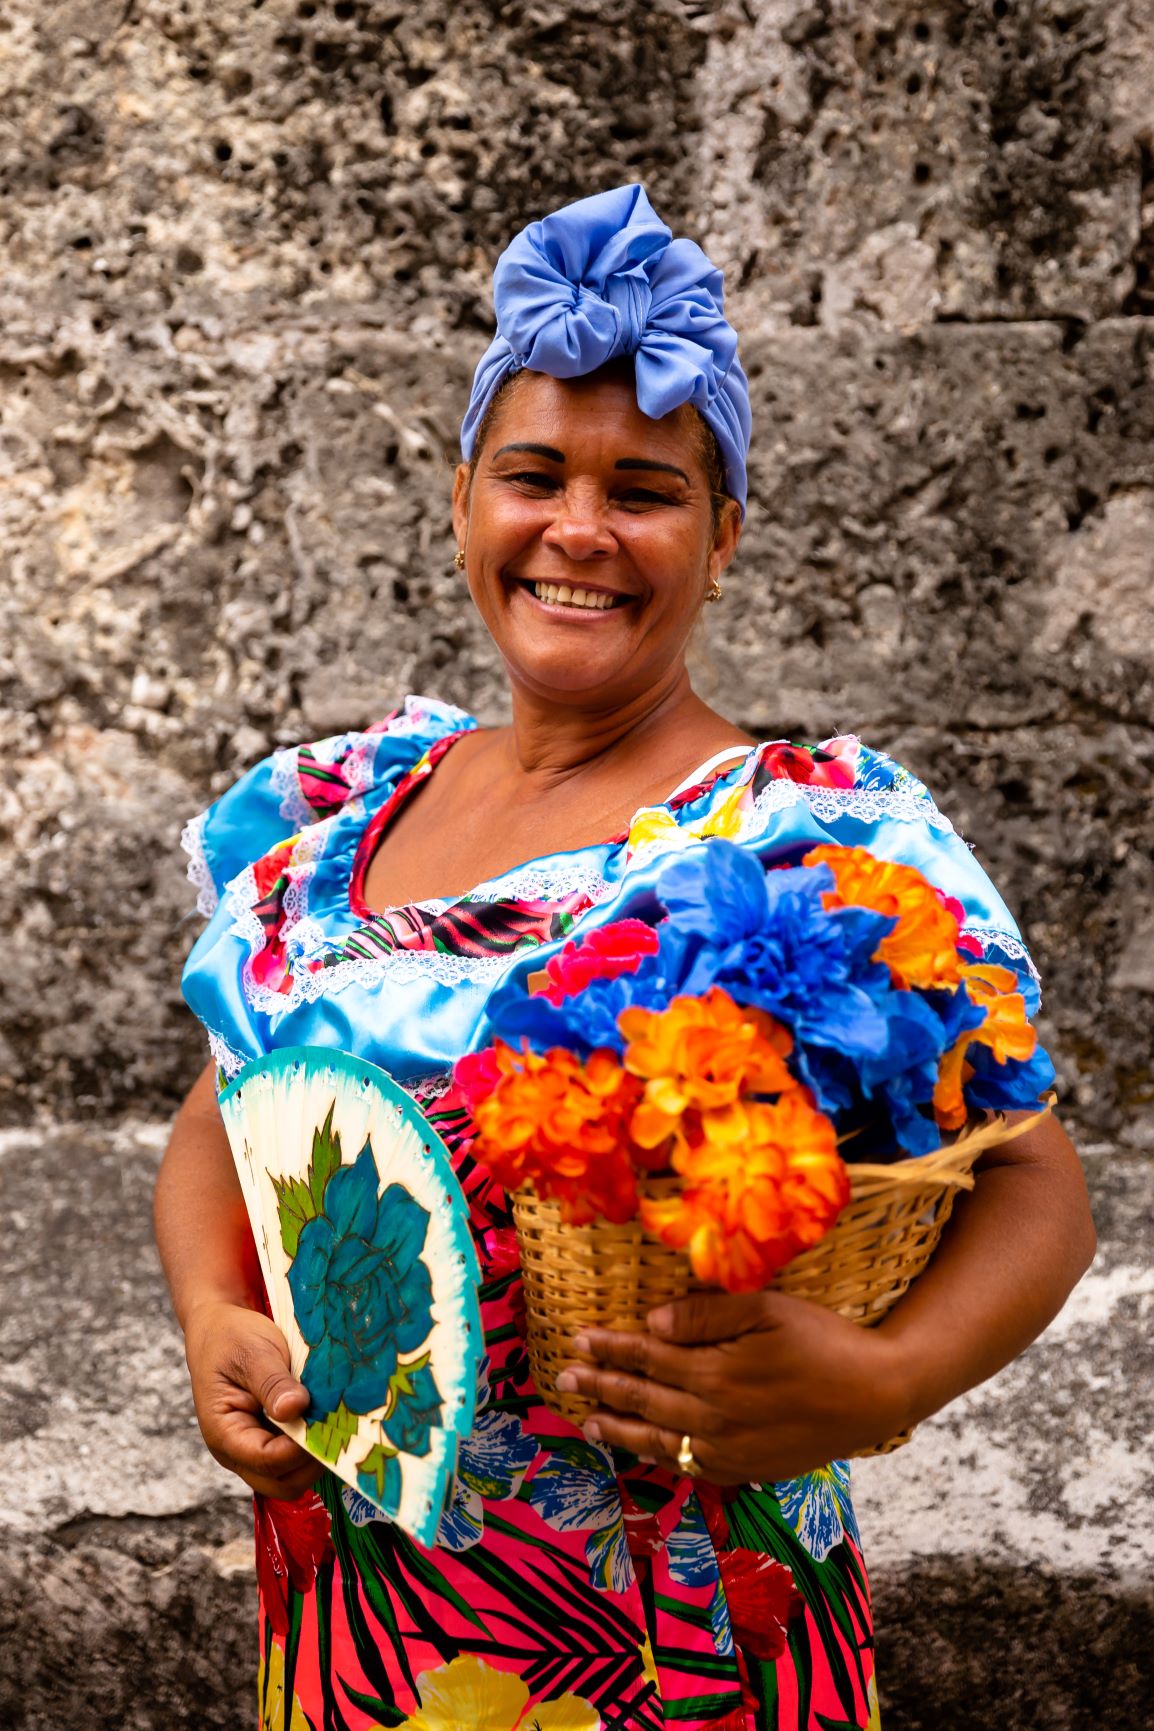 Colourful lady in Cuba